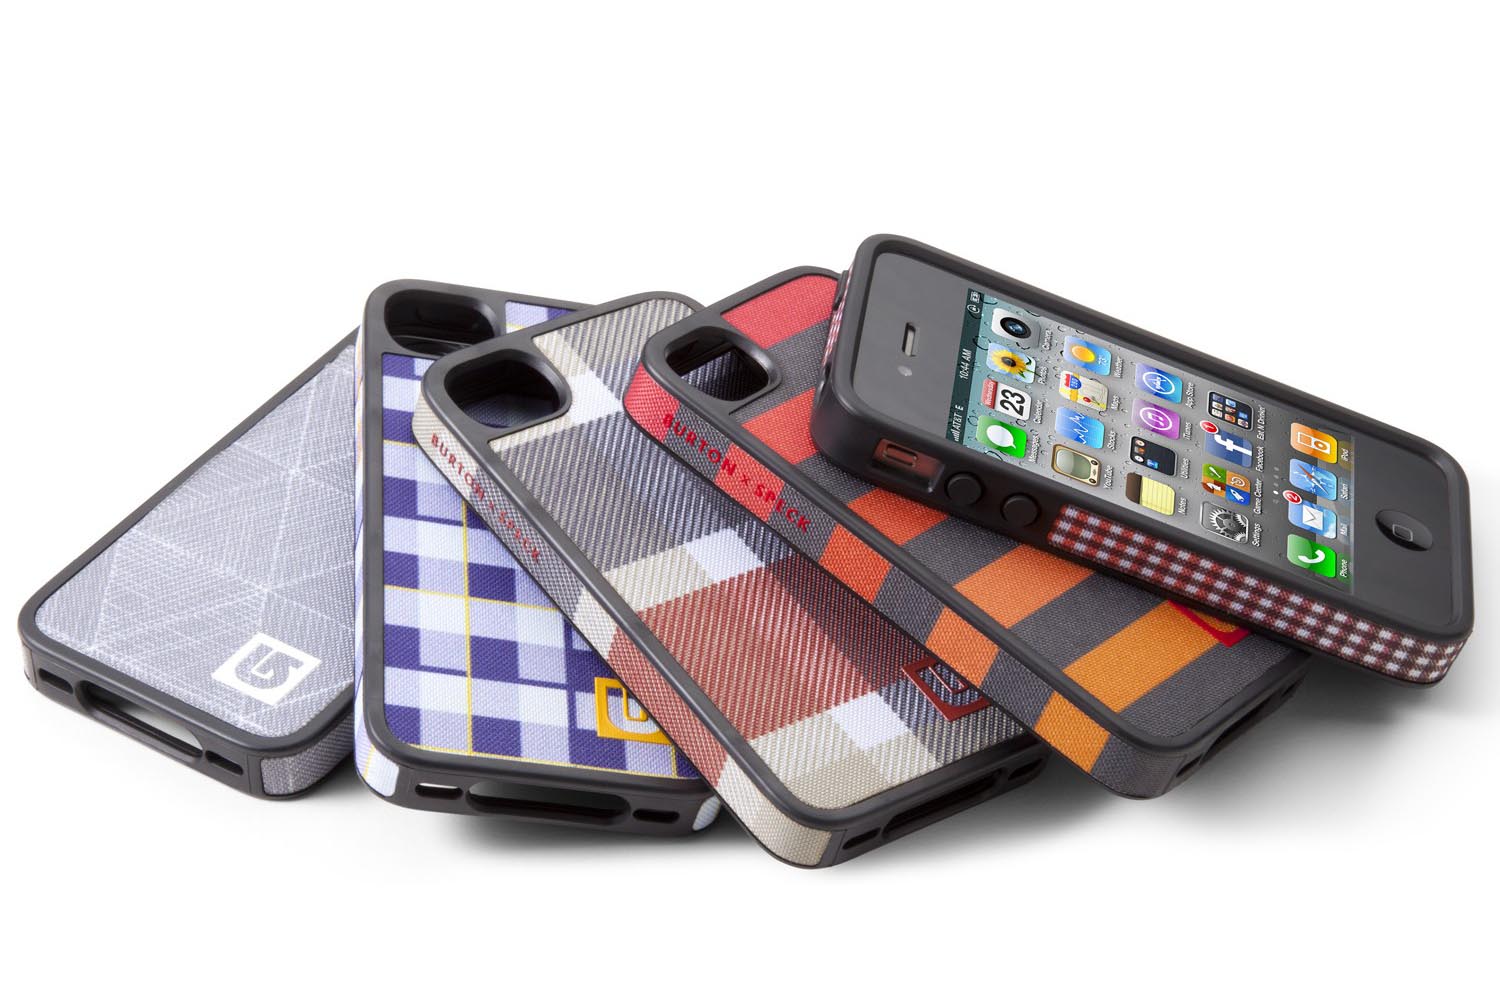  iphone 4s cases 